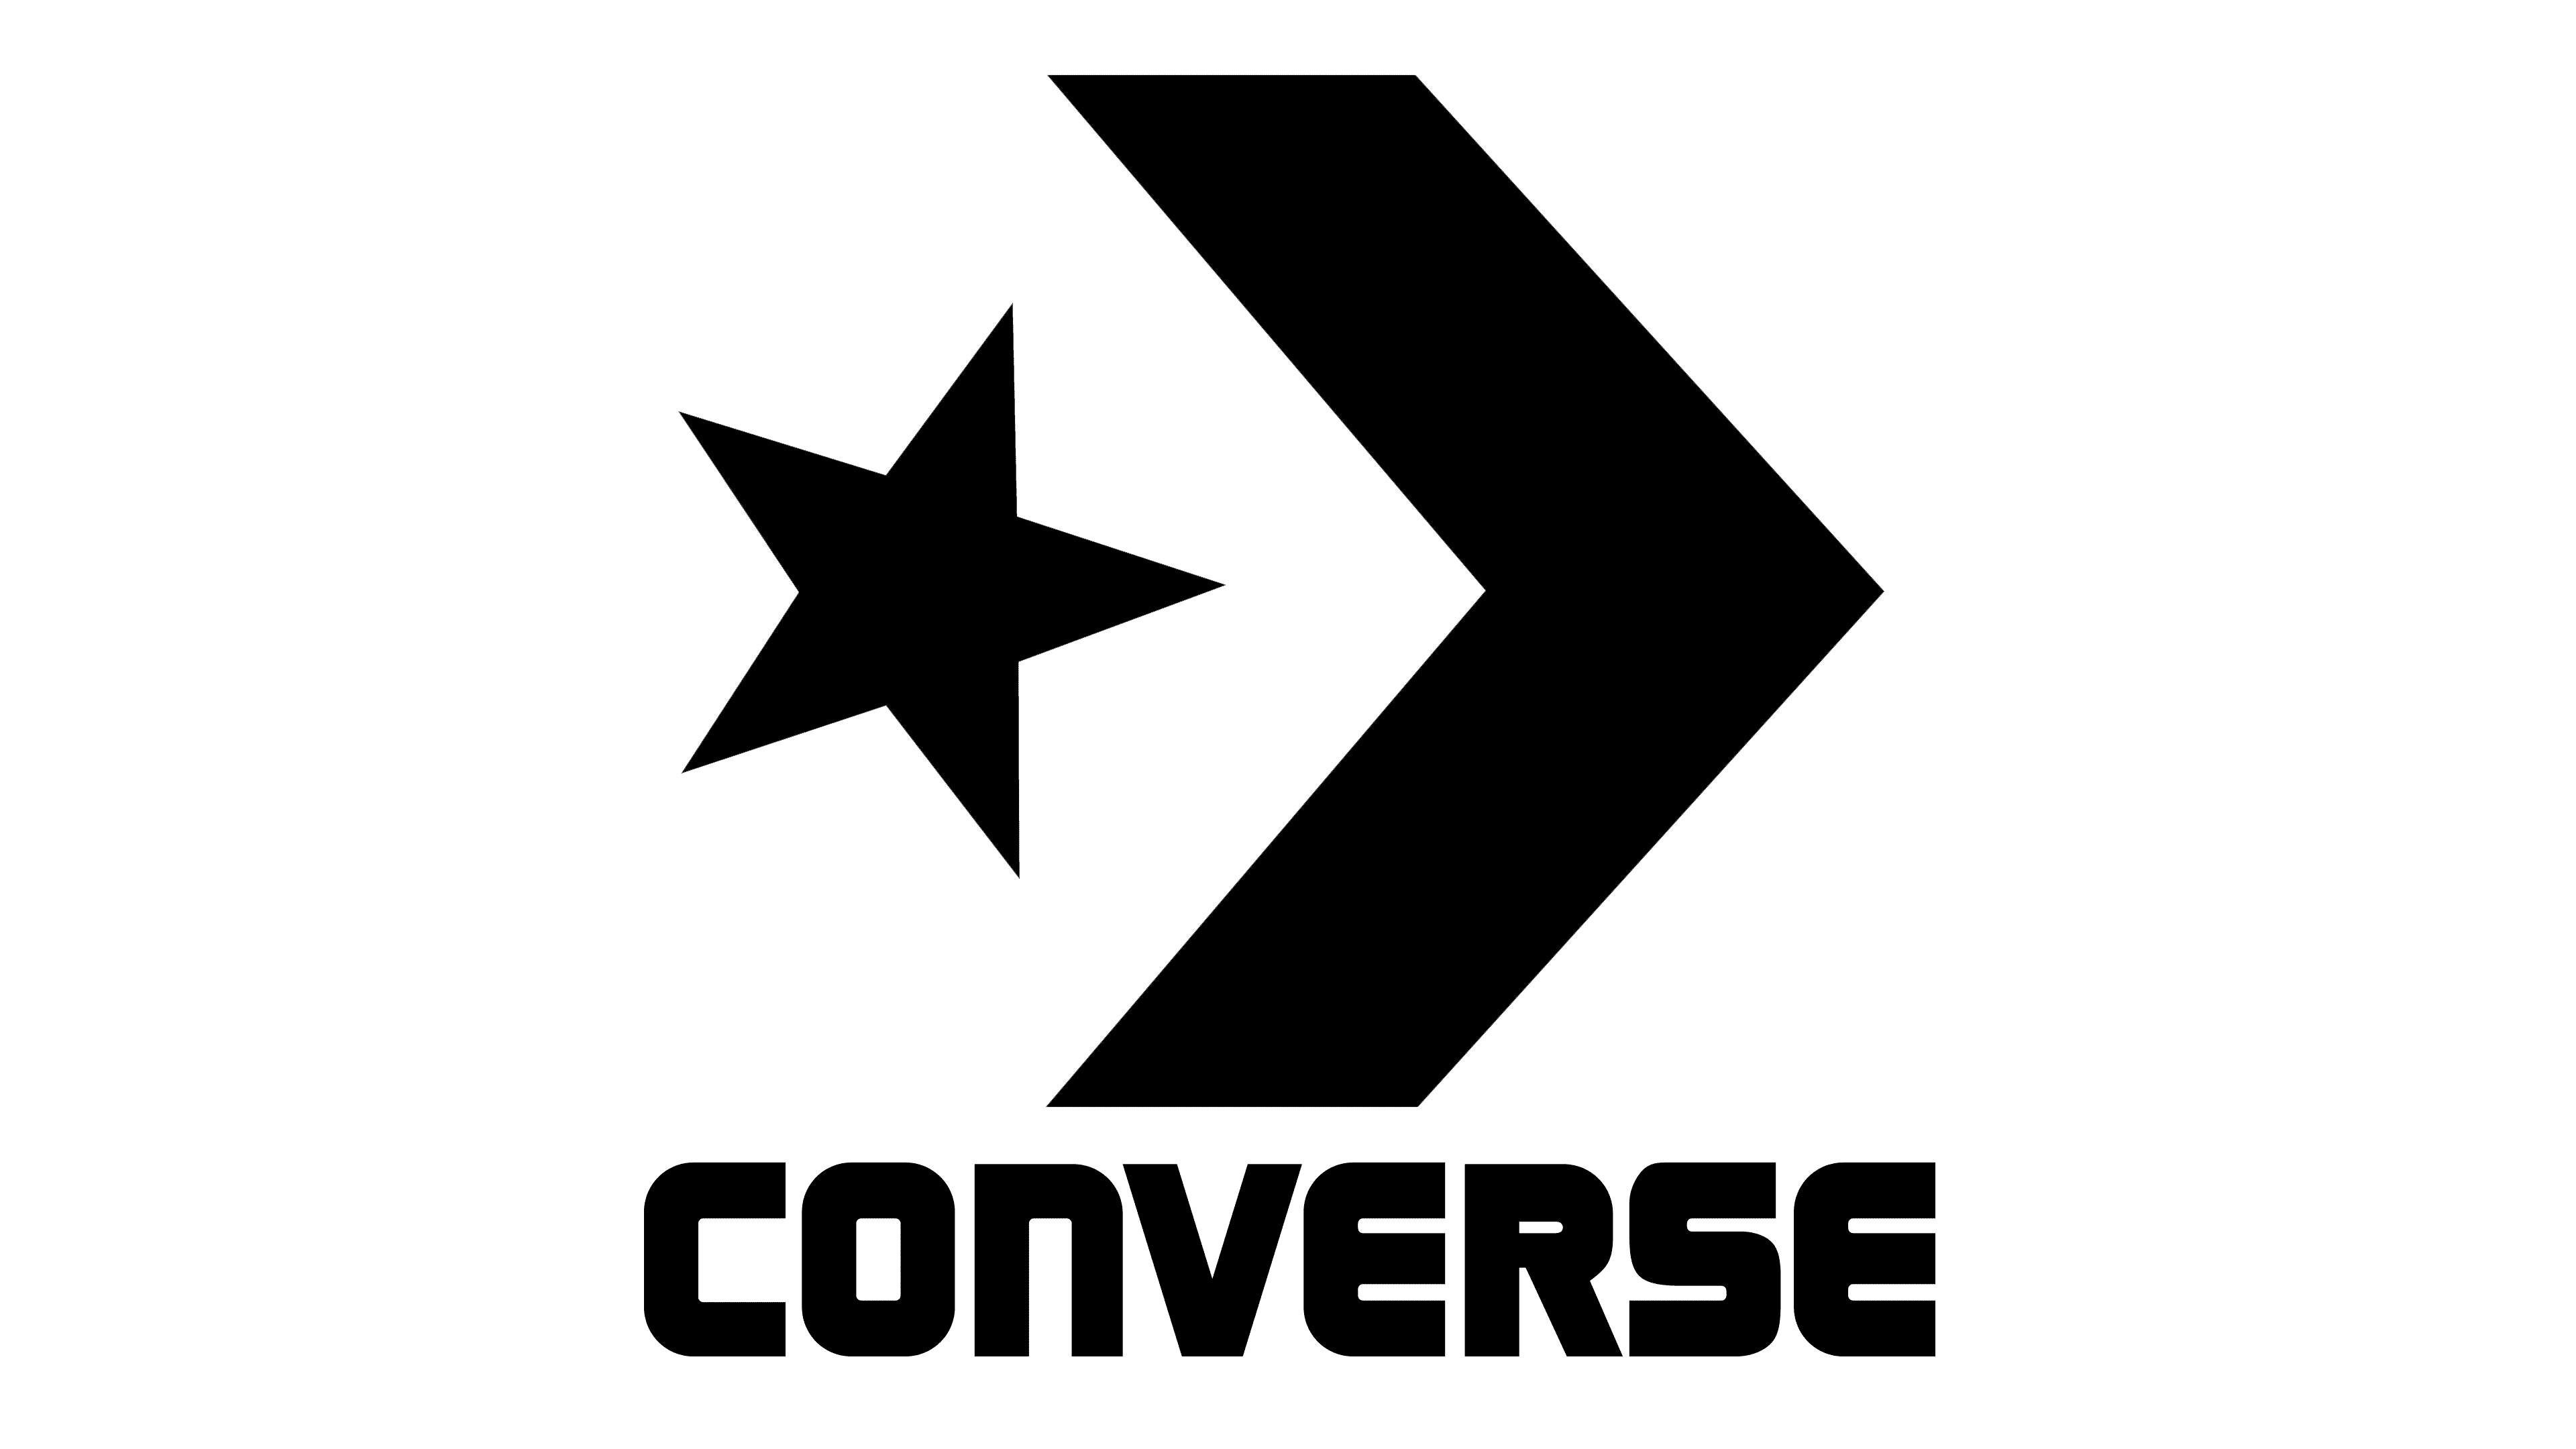 All Star Converse Logo History Symbol And Evolution